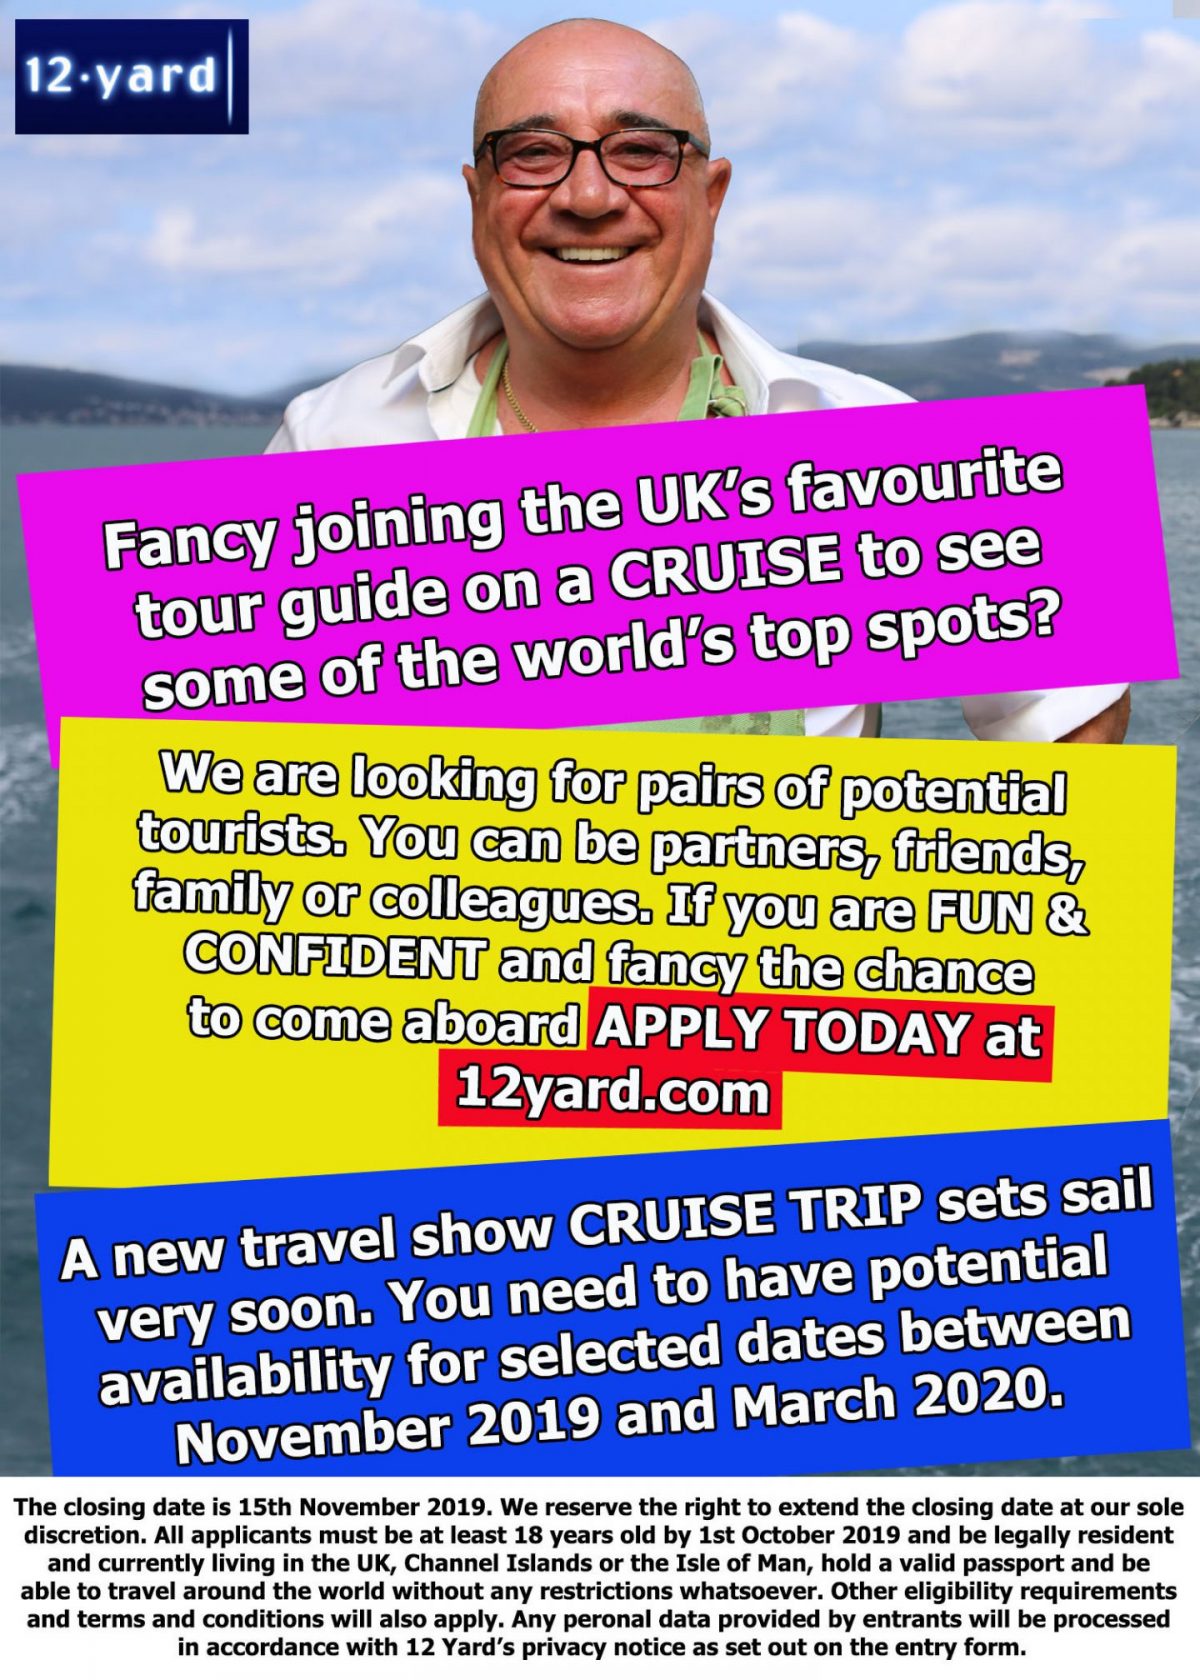 New travel show CRUISE TRIP sets sail very soon.